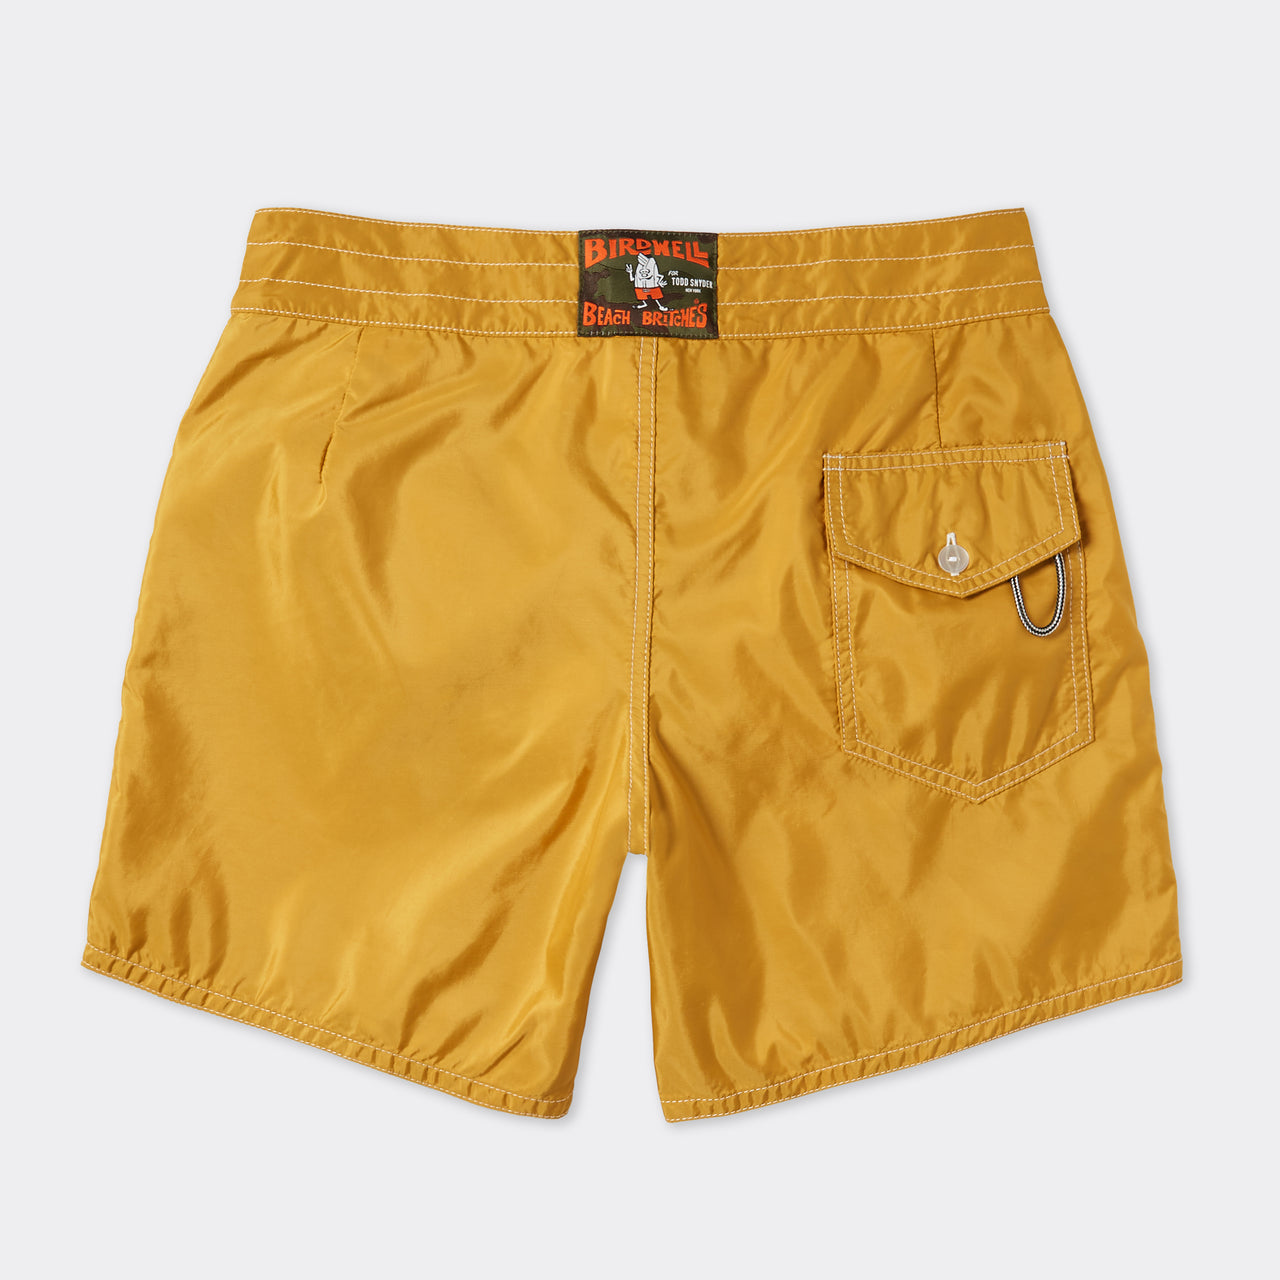 Todd Snyder x Birdwell 310 Board Shorts - Vintage Gold